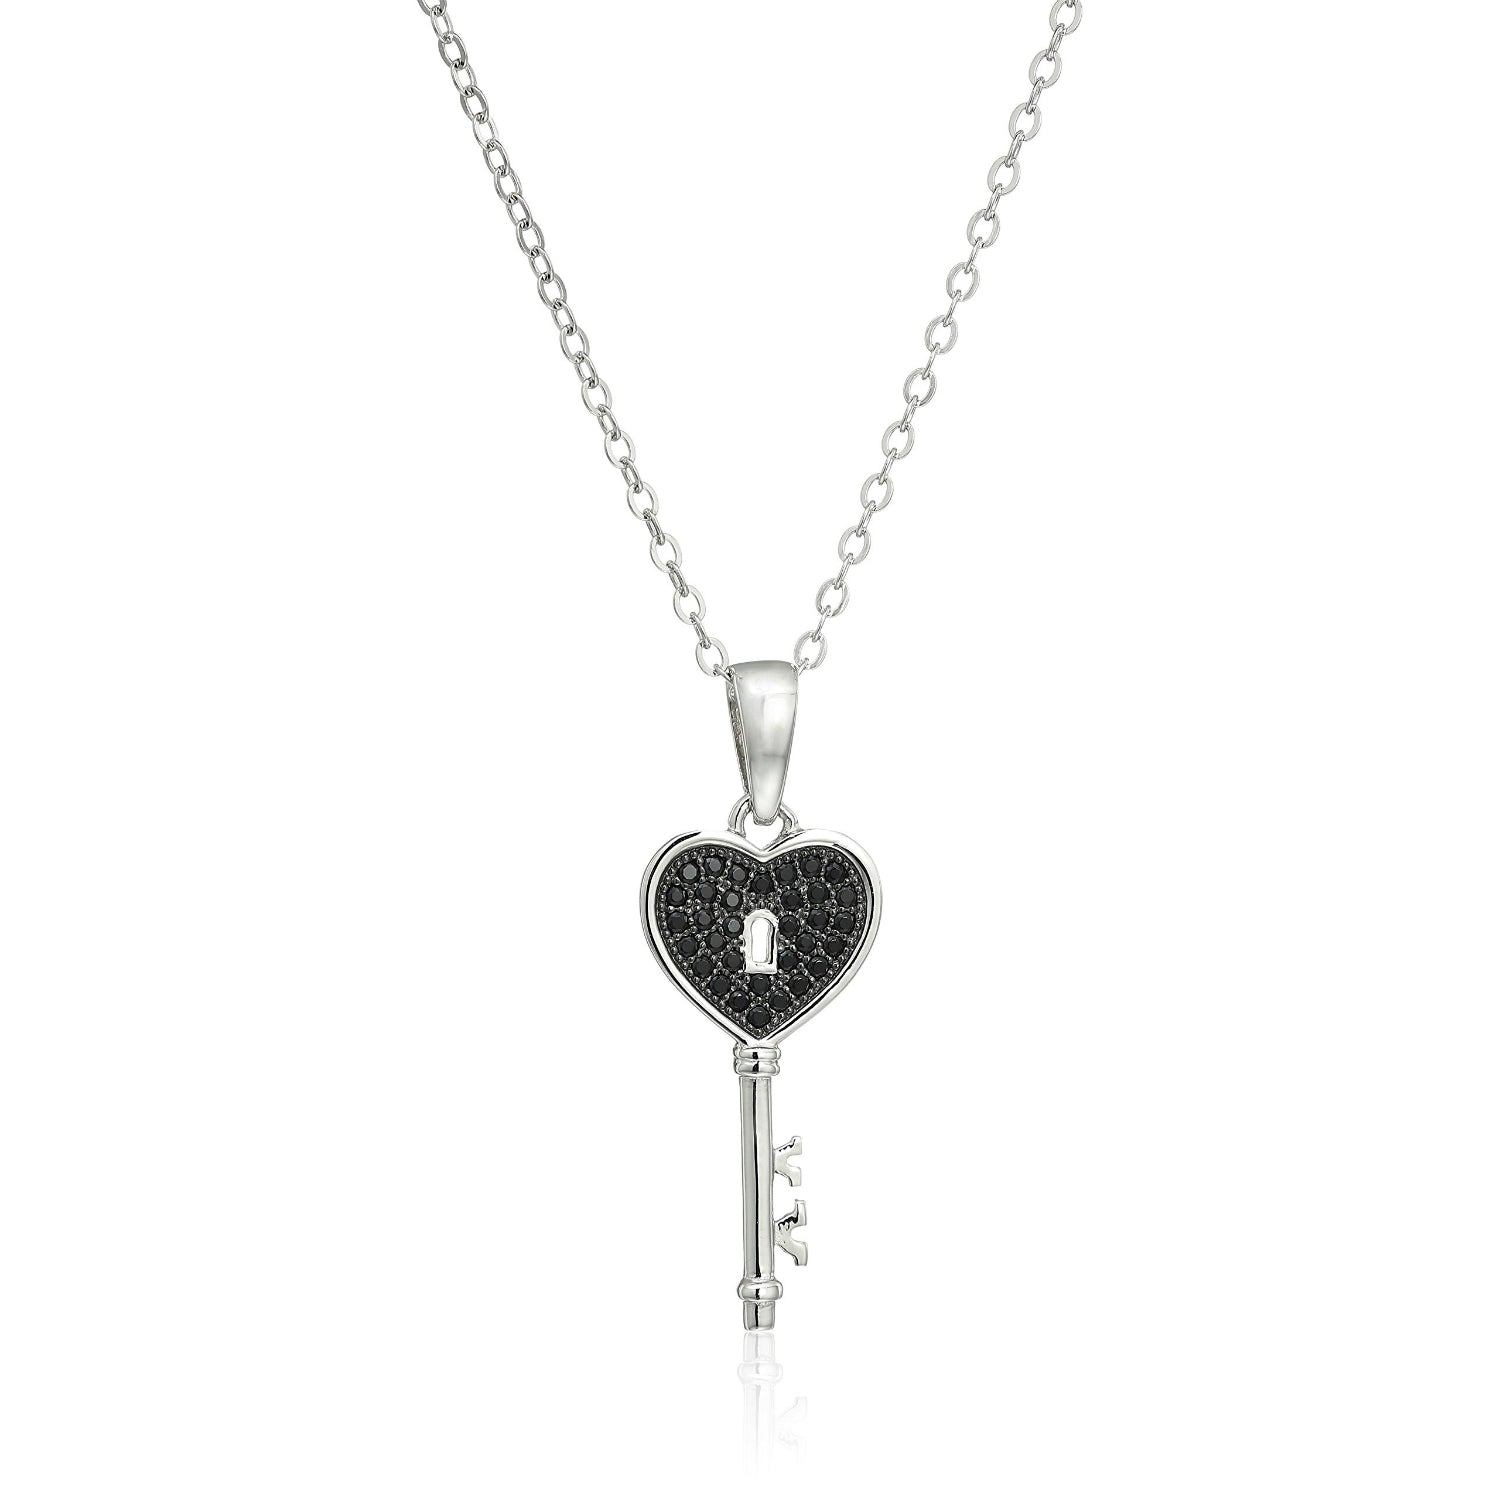 Sterling Silver Black Spinel Key Pendant Necklace, 18" - pinctore